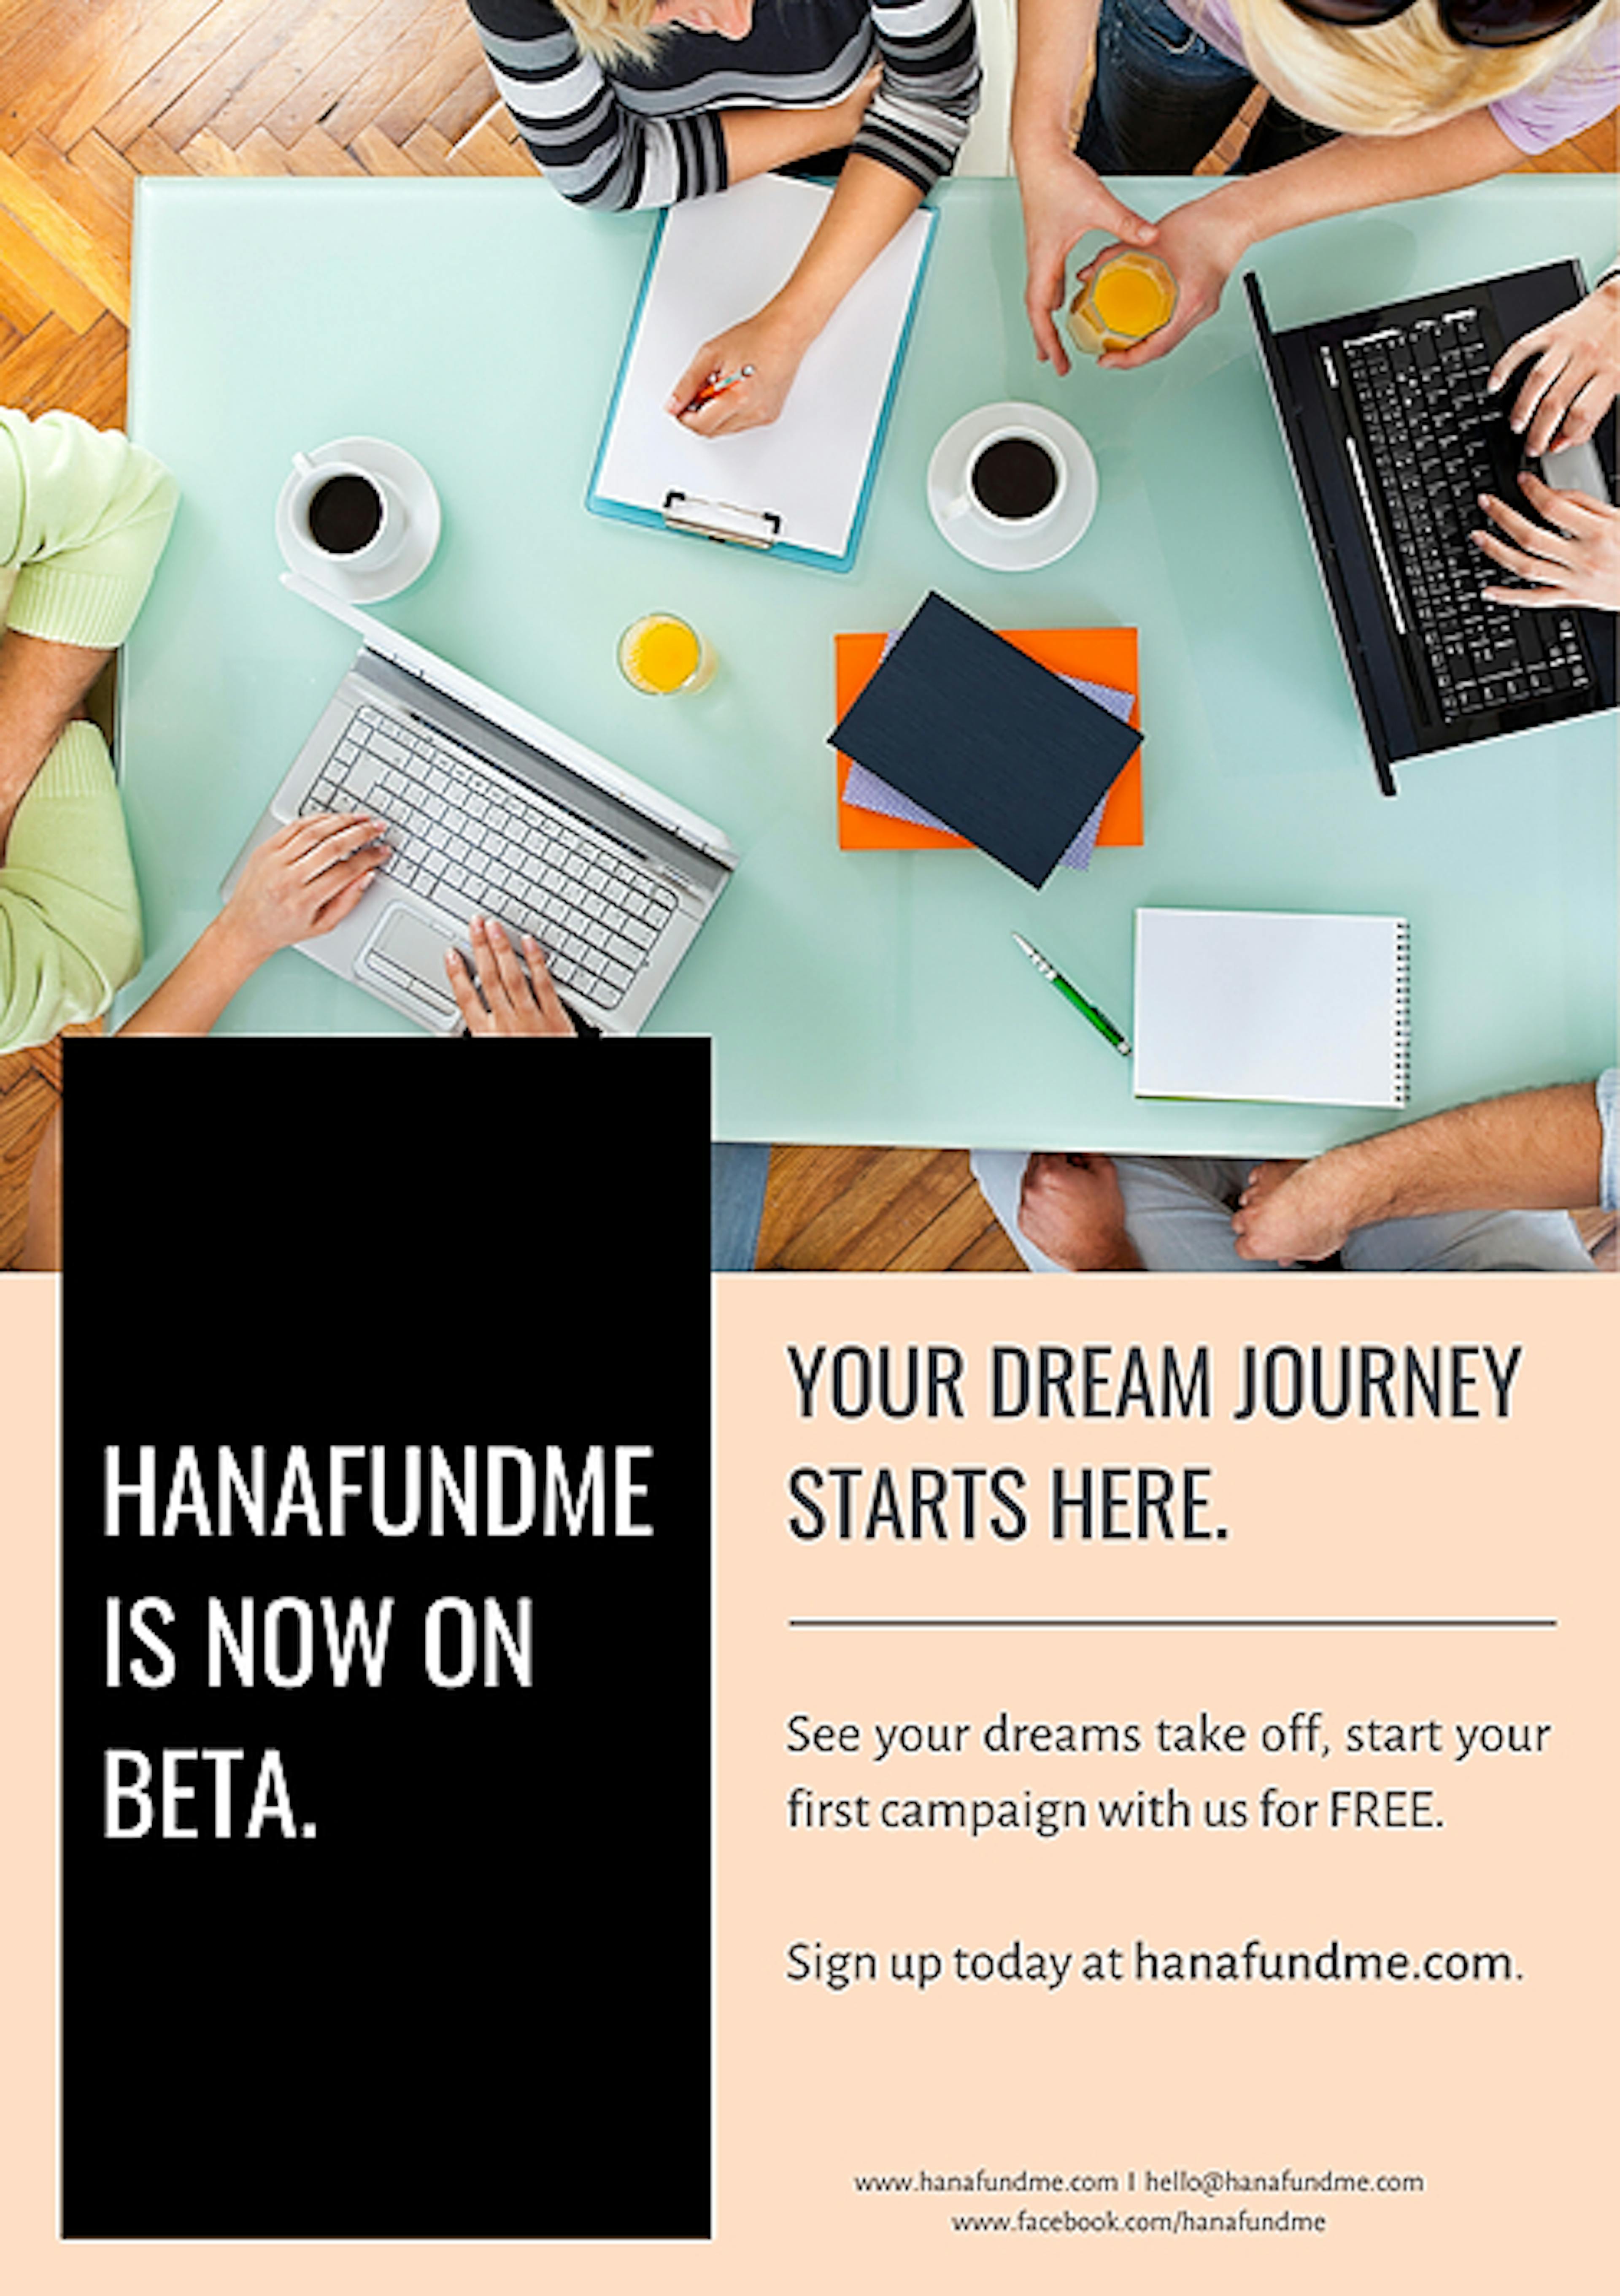 /hanafundmecom-the-crowdfunding-platform-for-women-3j1tk32ju feature image